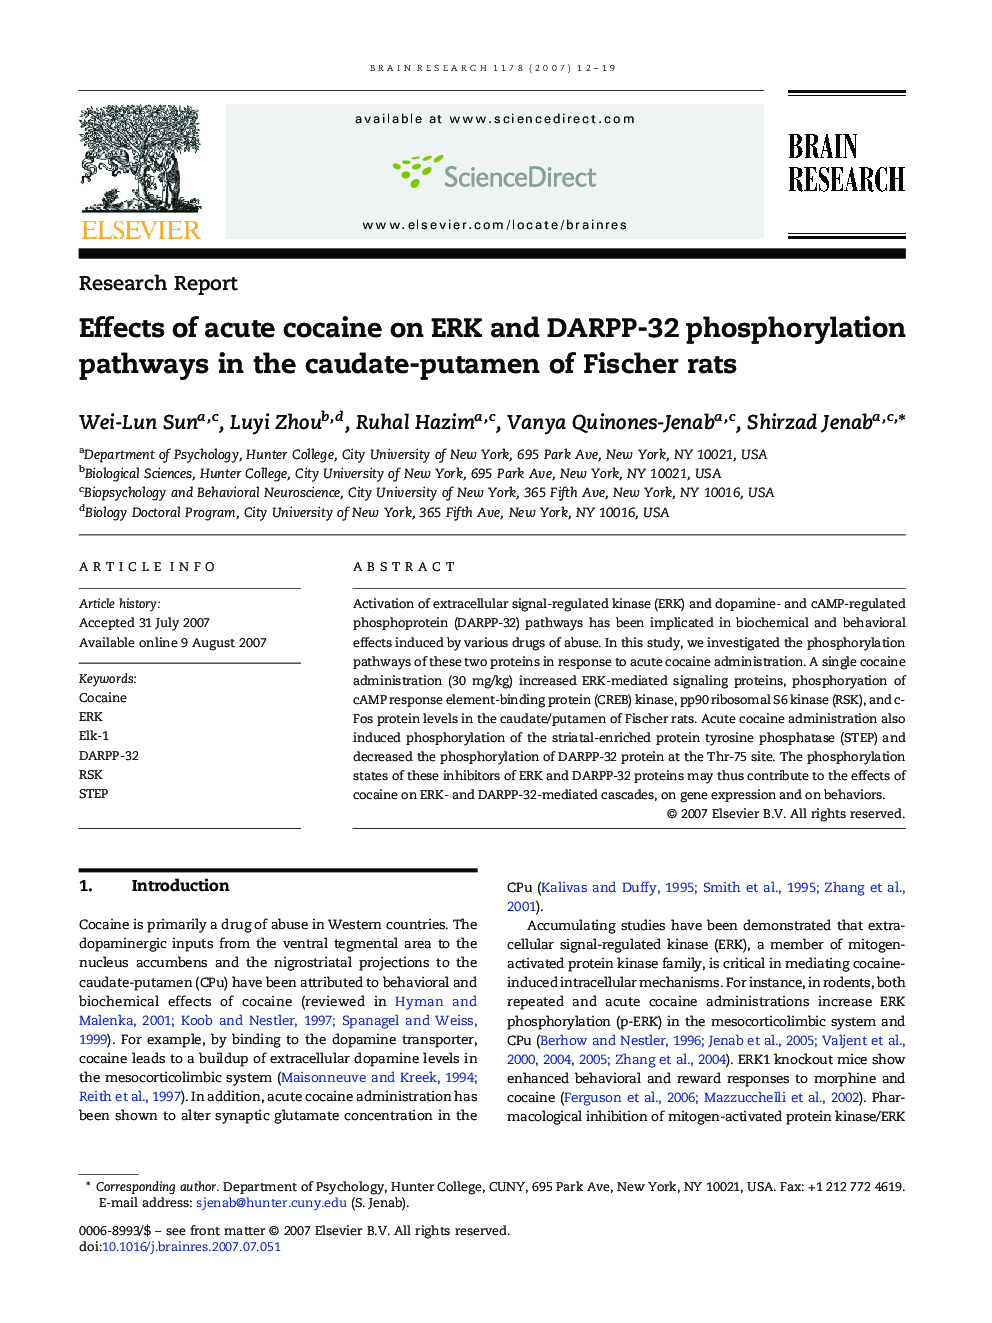 Effects of acute cocaine on ERK and DARPP-32 phosphorylation pathways in the caudate-putamen of Fischer rats